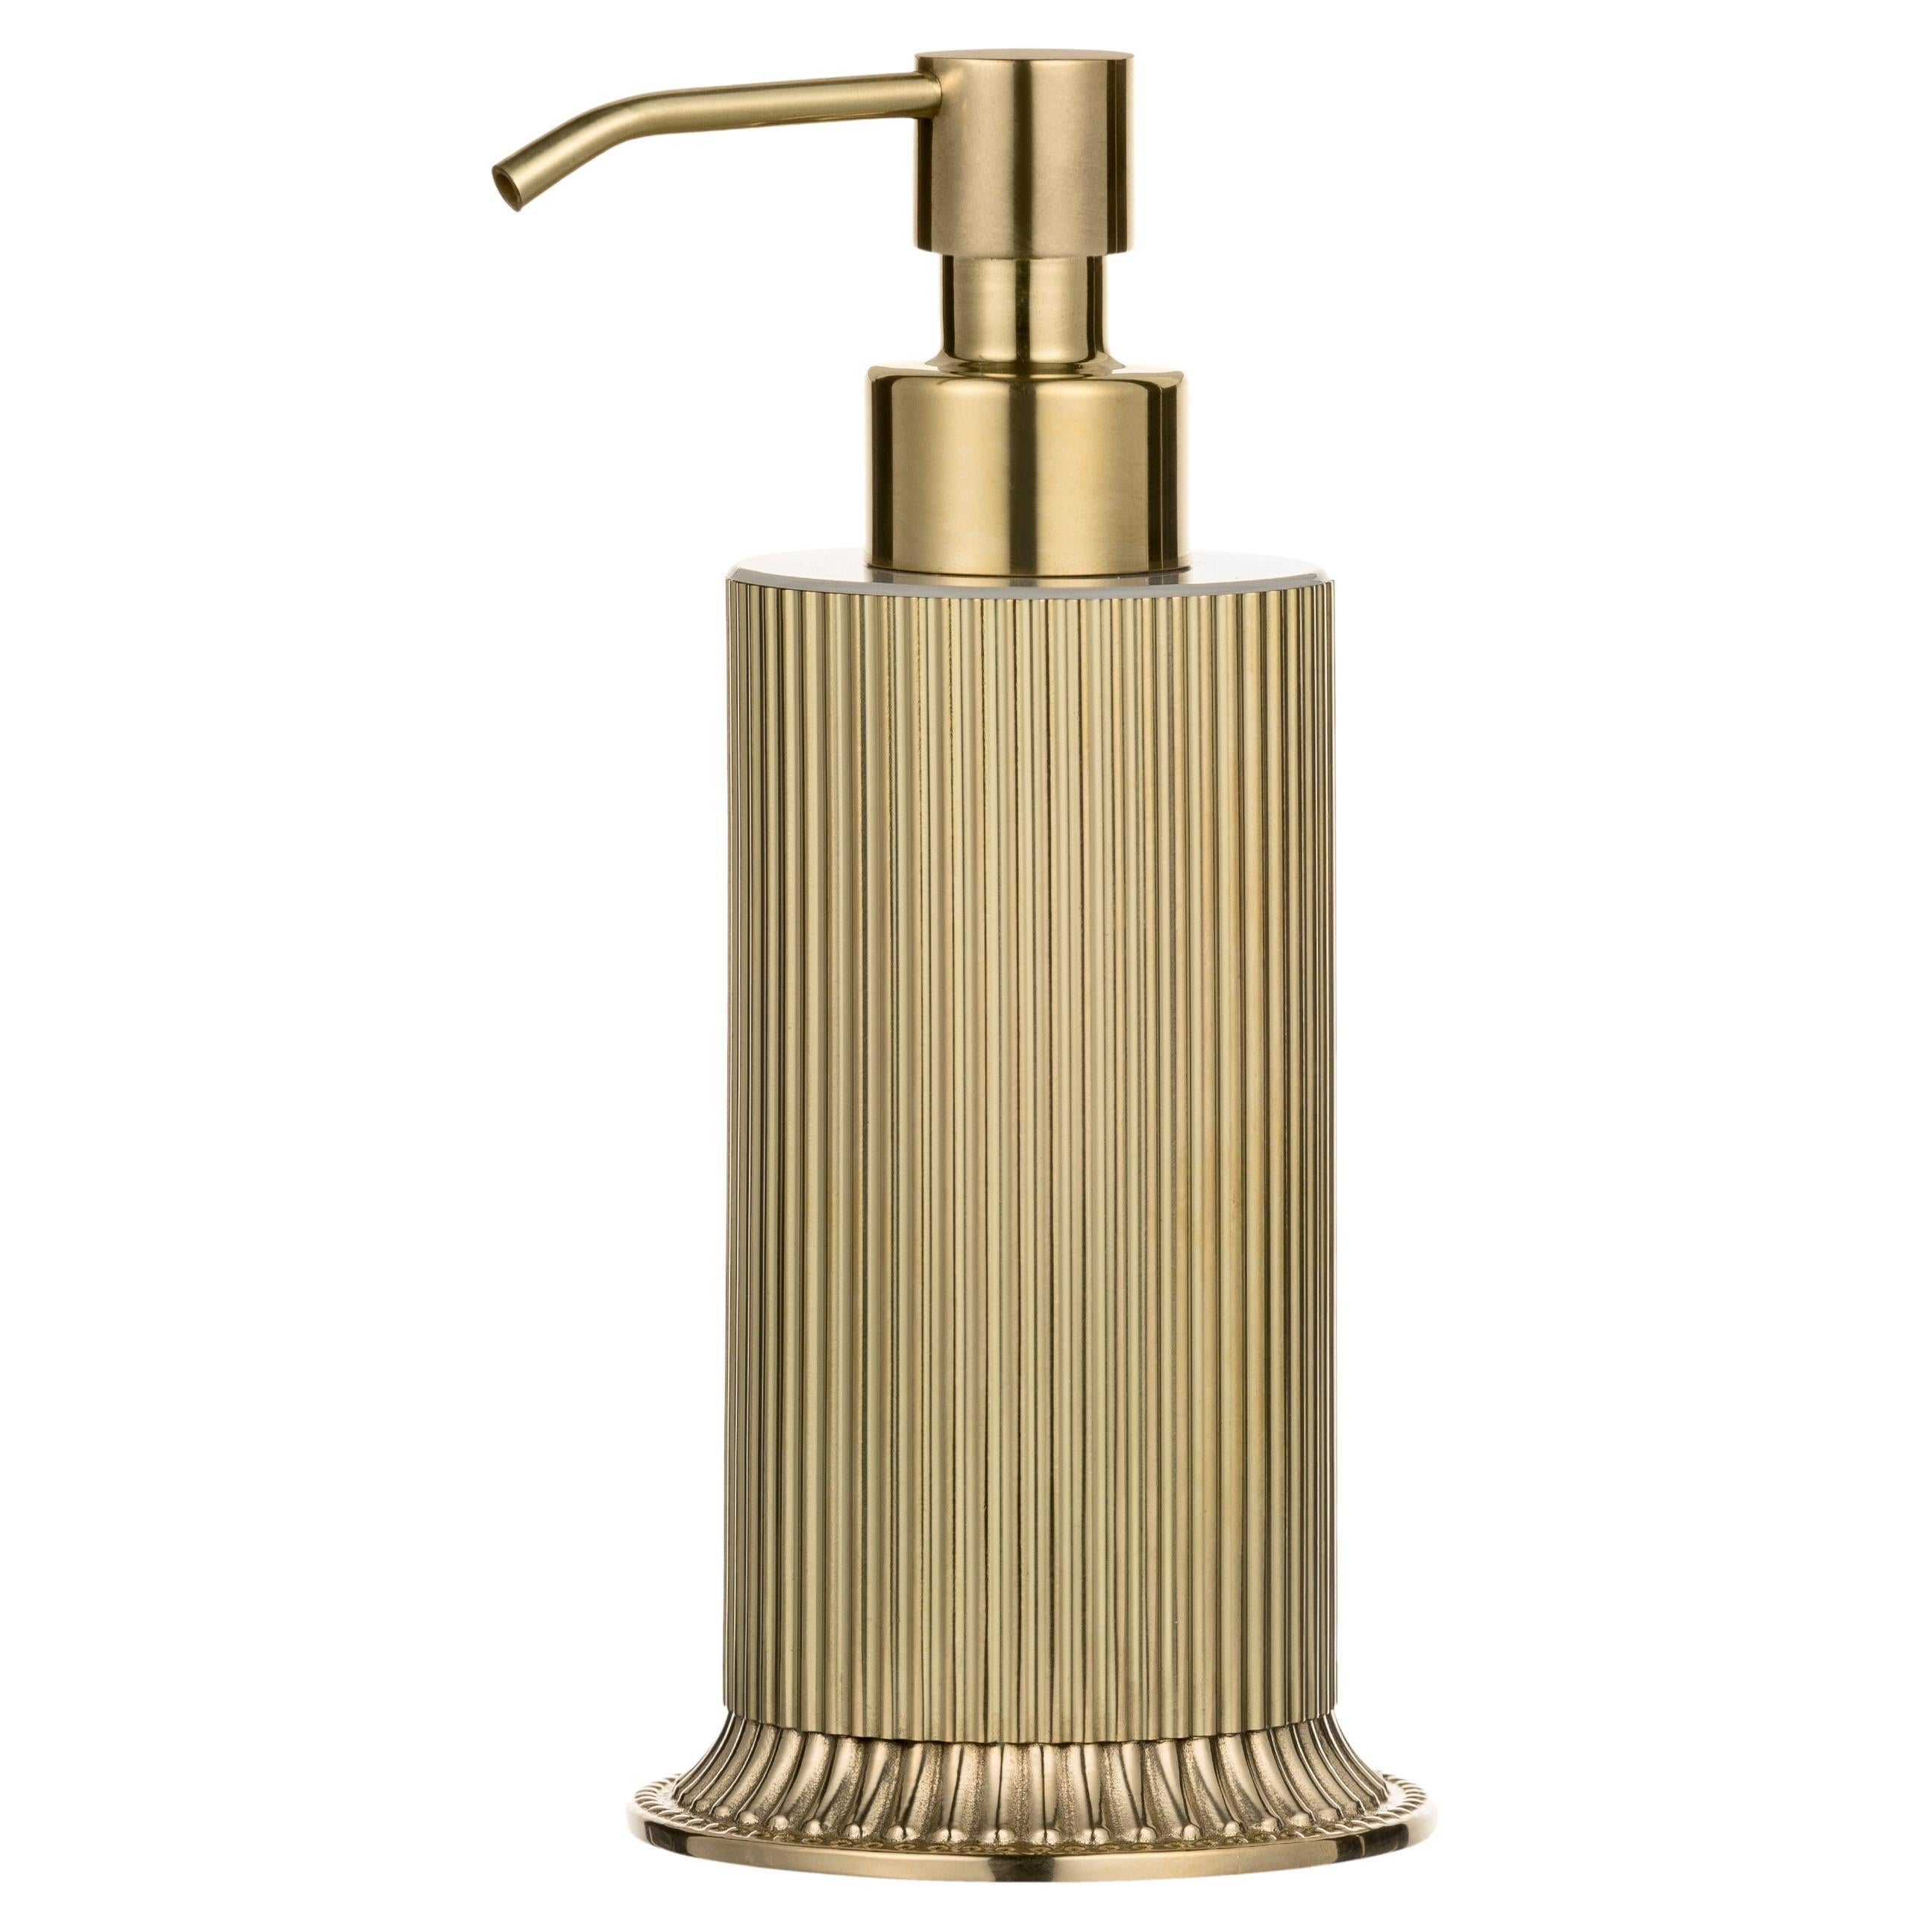 Striped brass soap dispenser